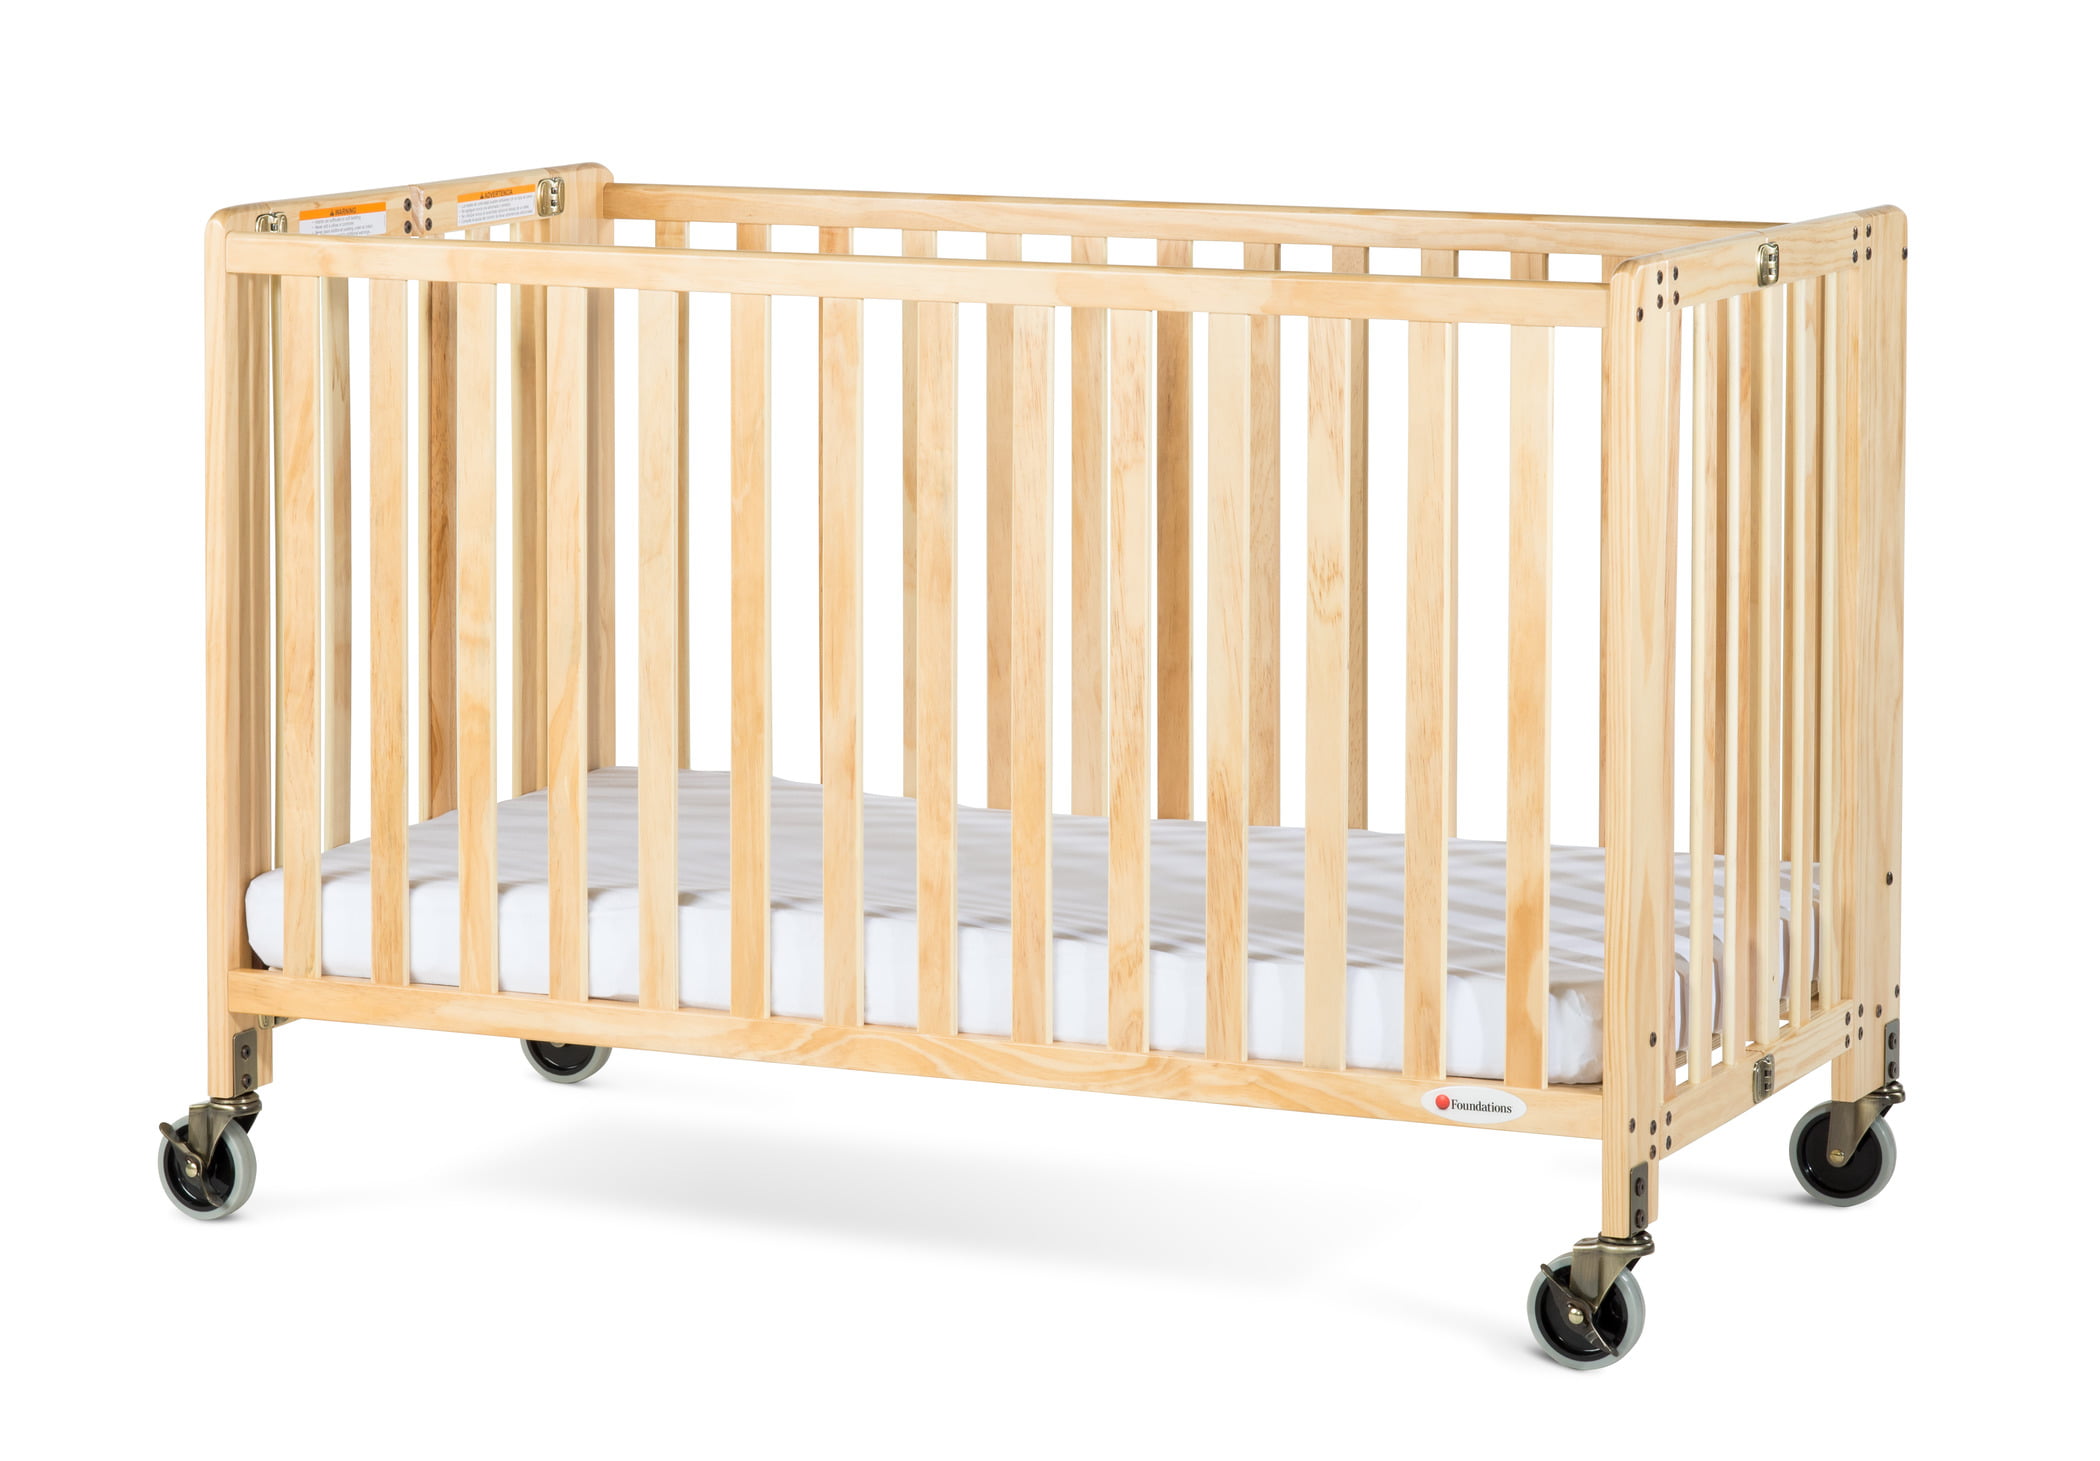 foundations portable crib